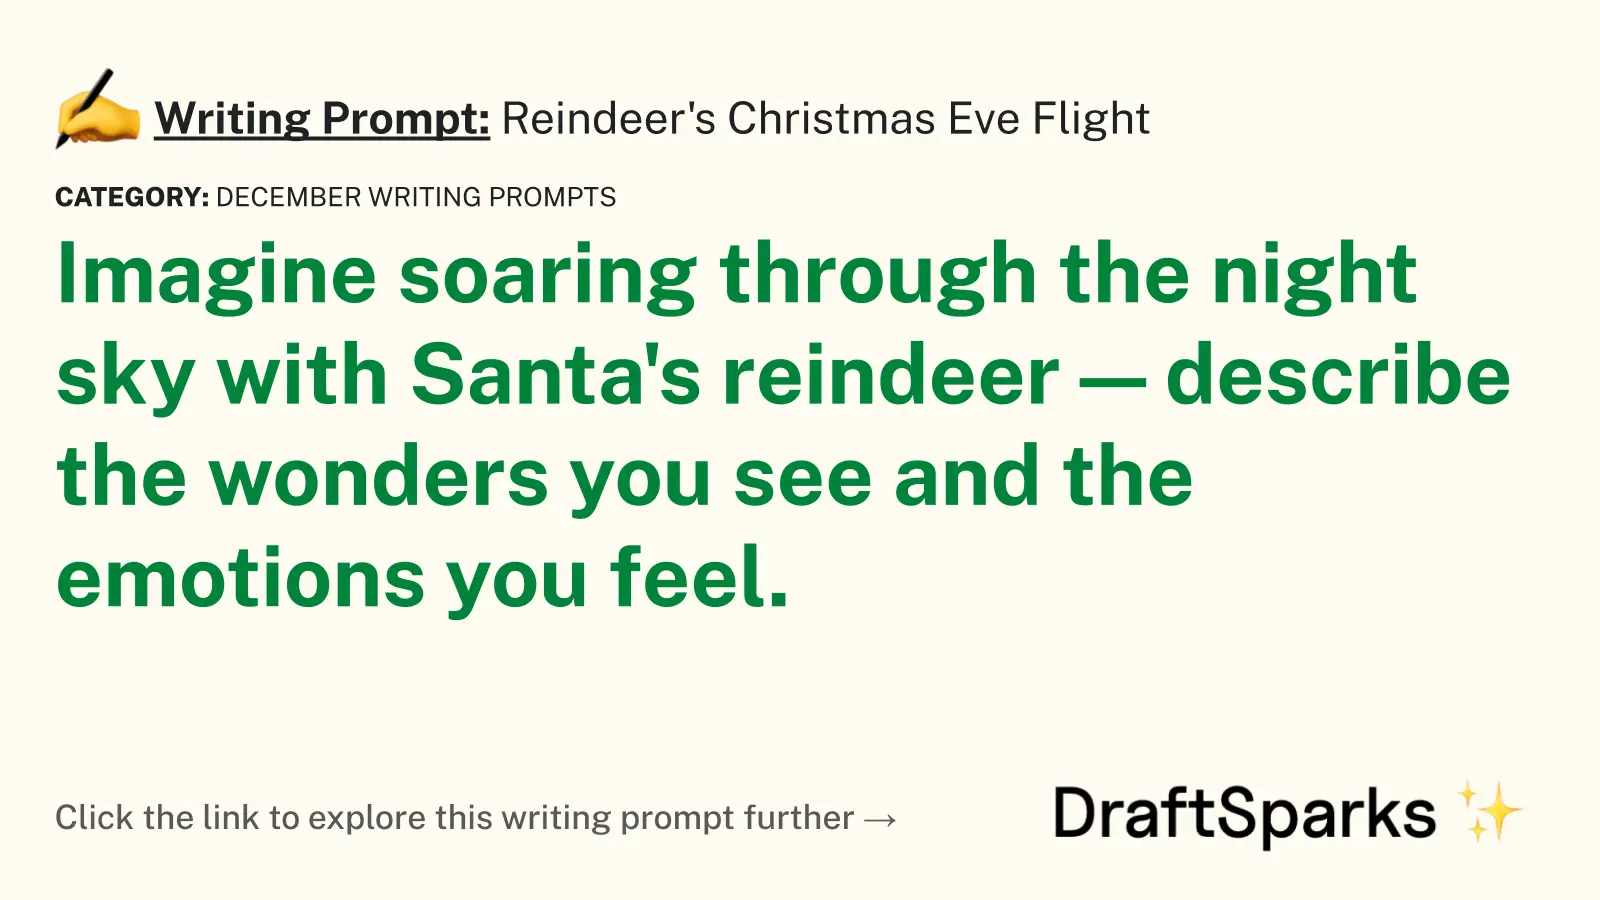 Reindeer’s Christmas Eve Flight